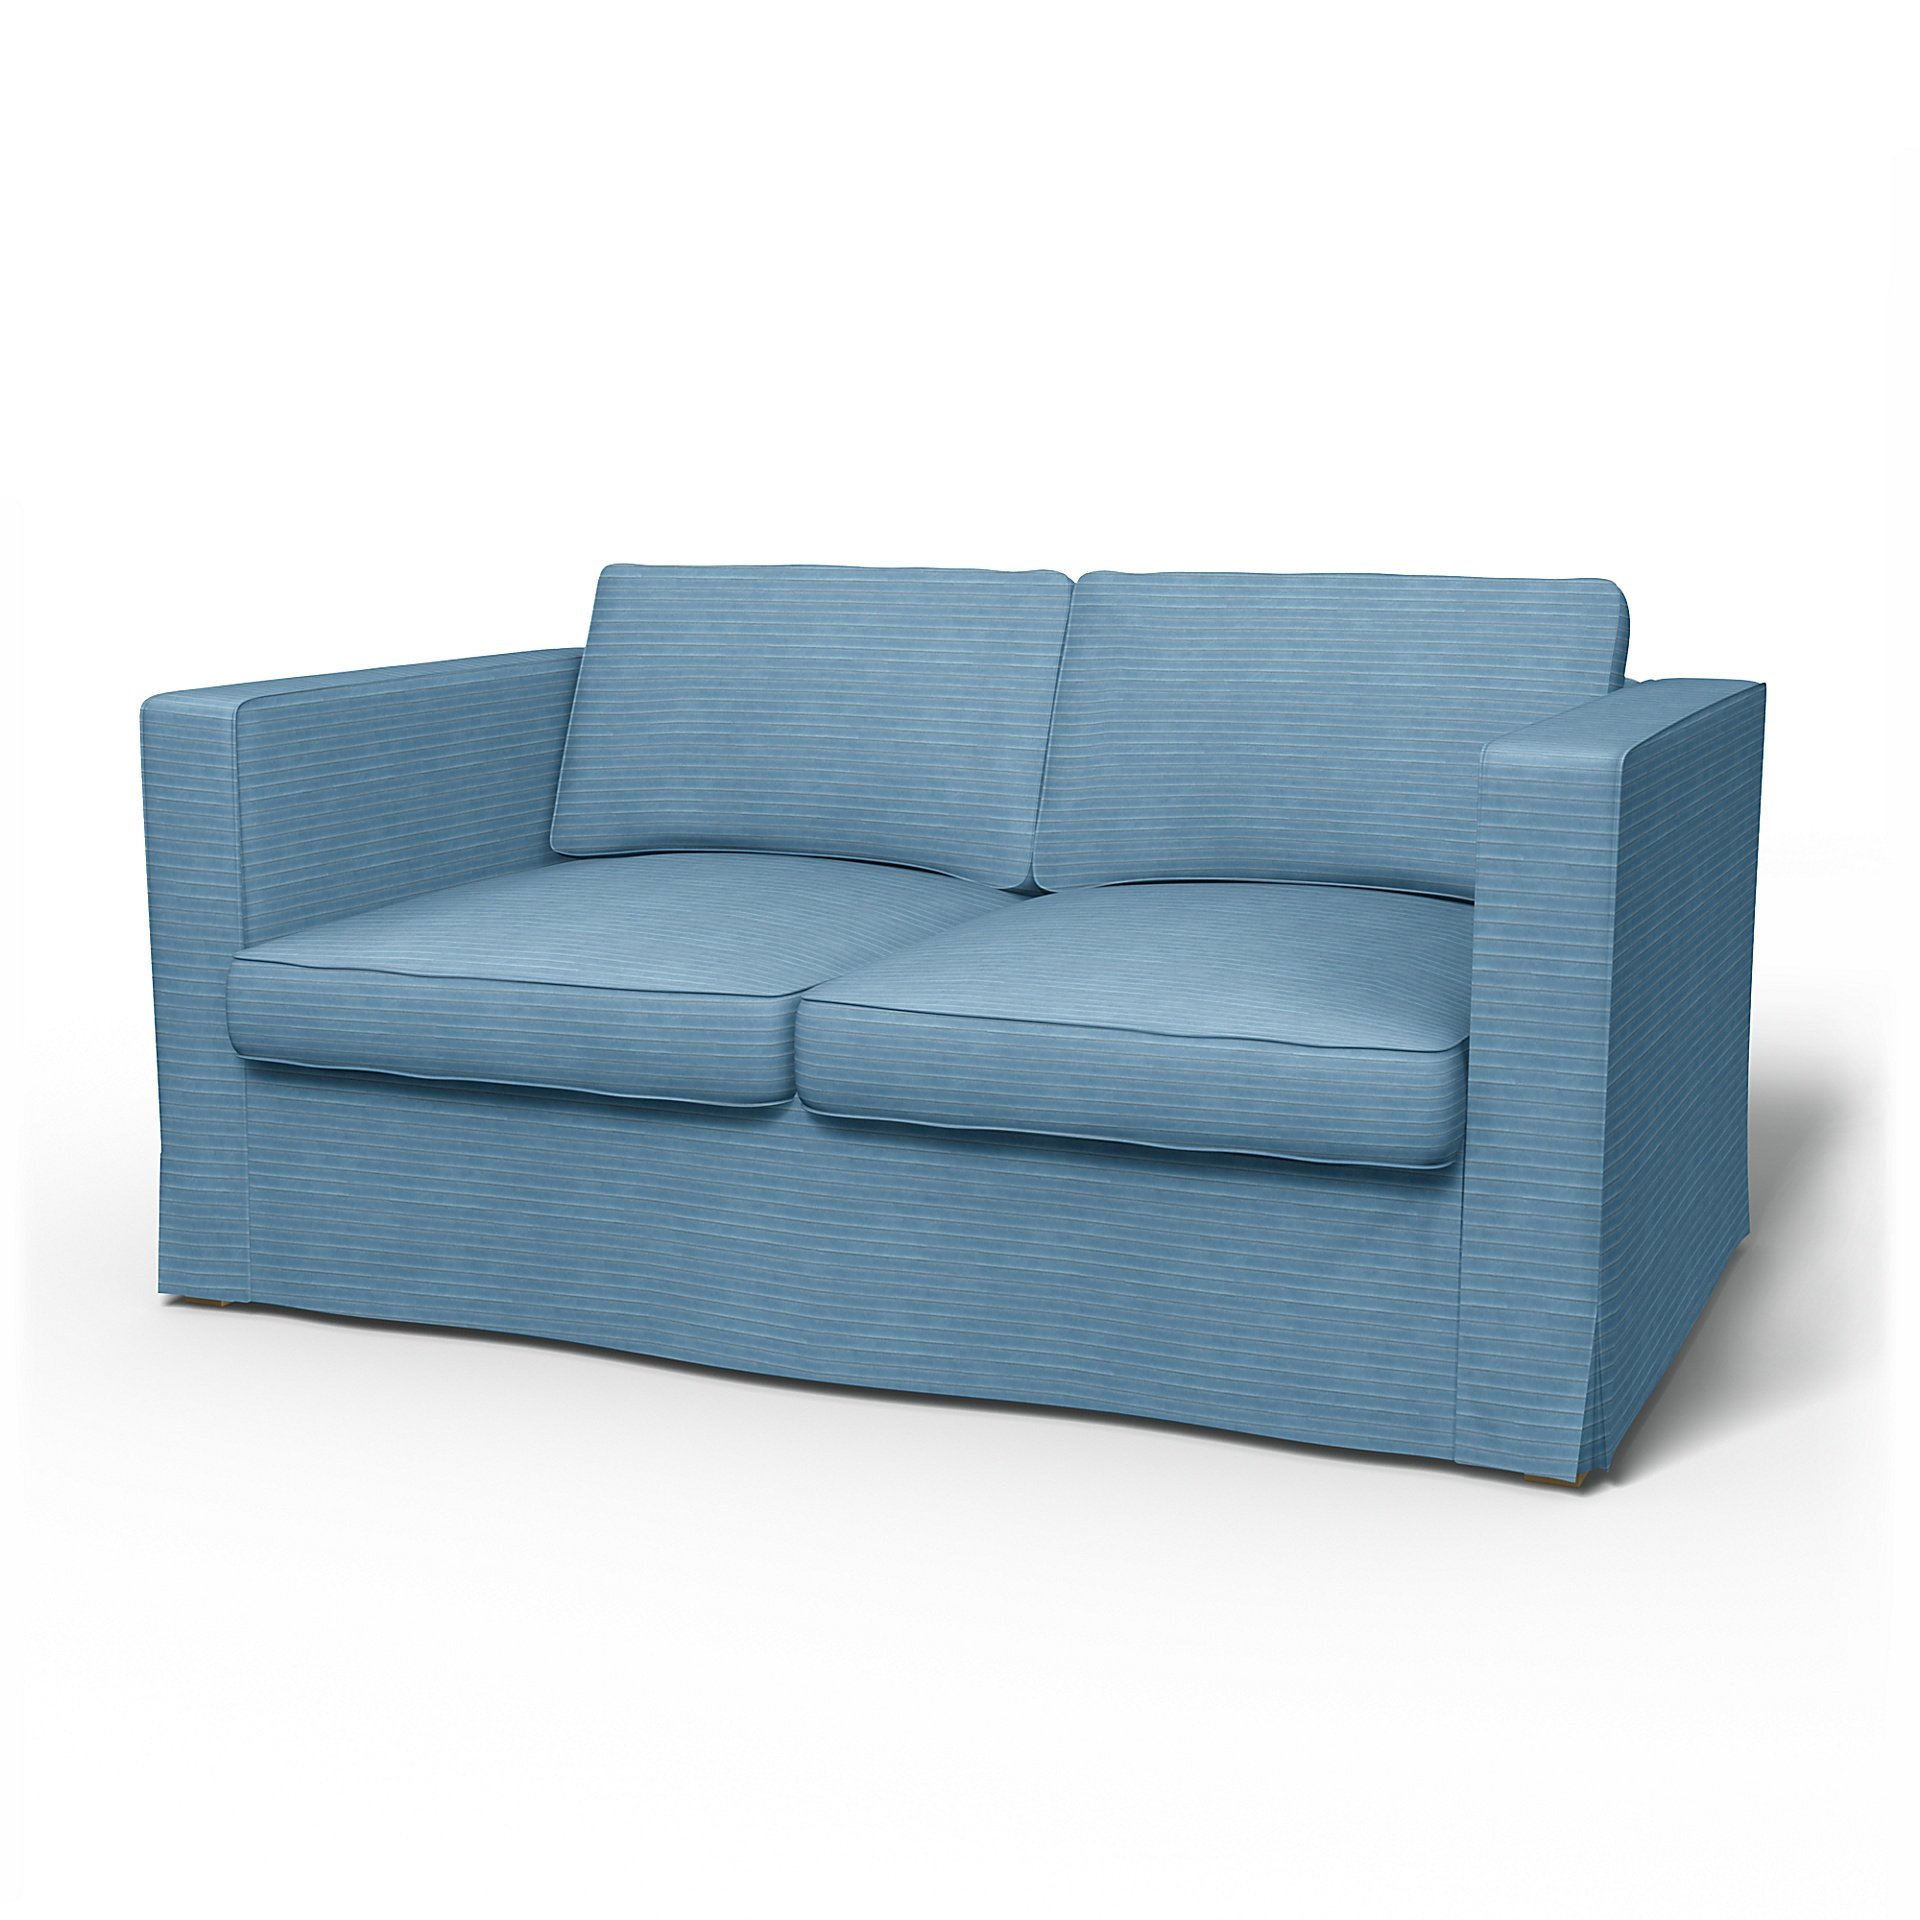 IKEA - Karlanda 2 Seater Sofa Cover, Sky Blue, Corduroy - Bemz